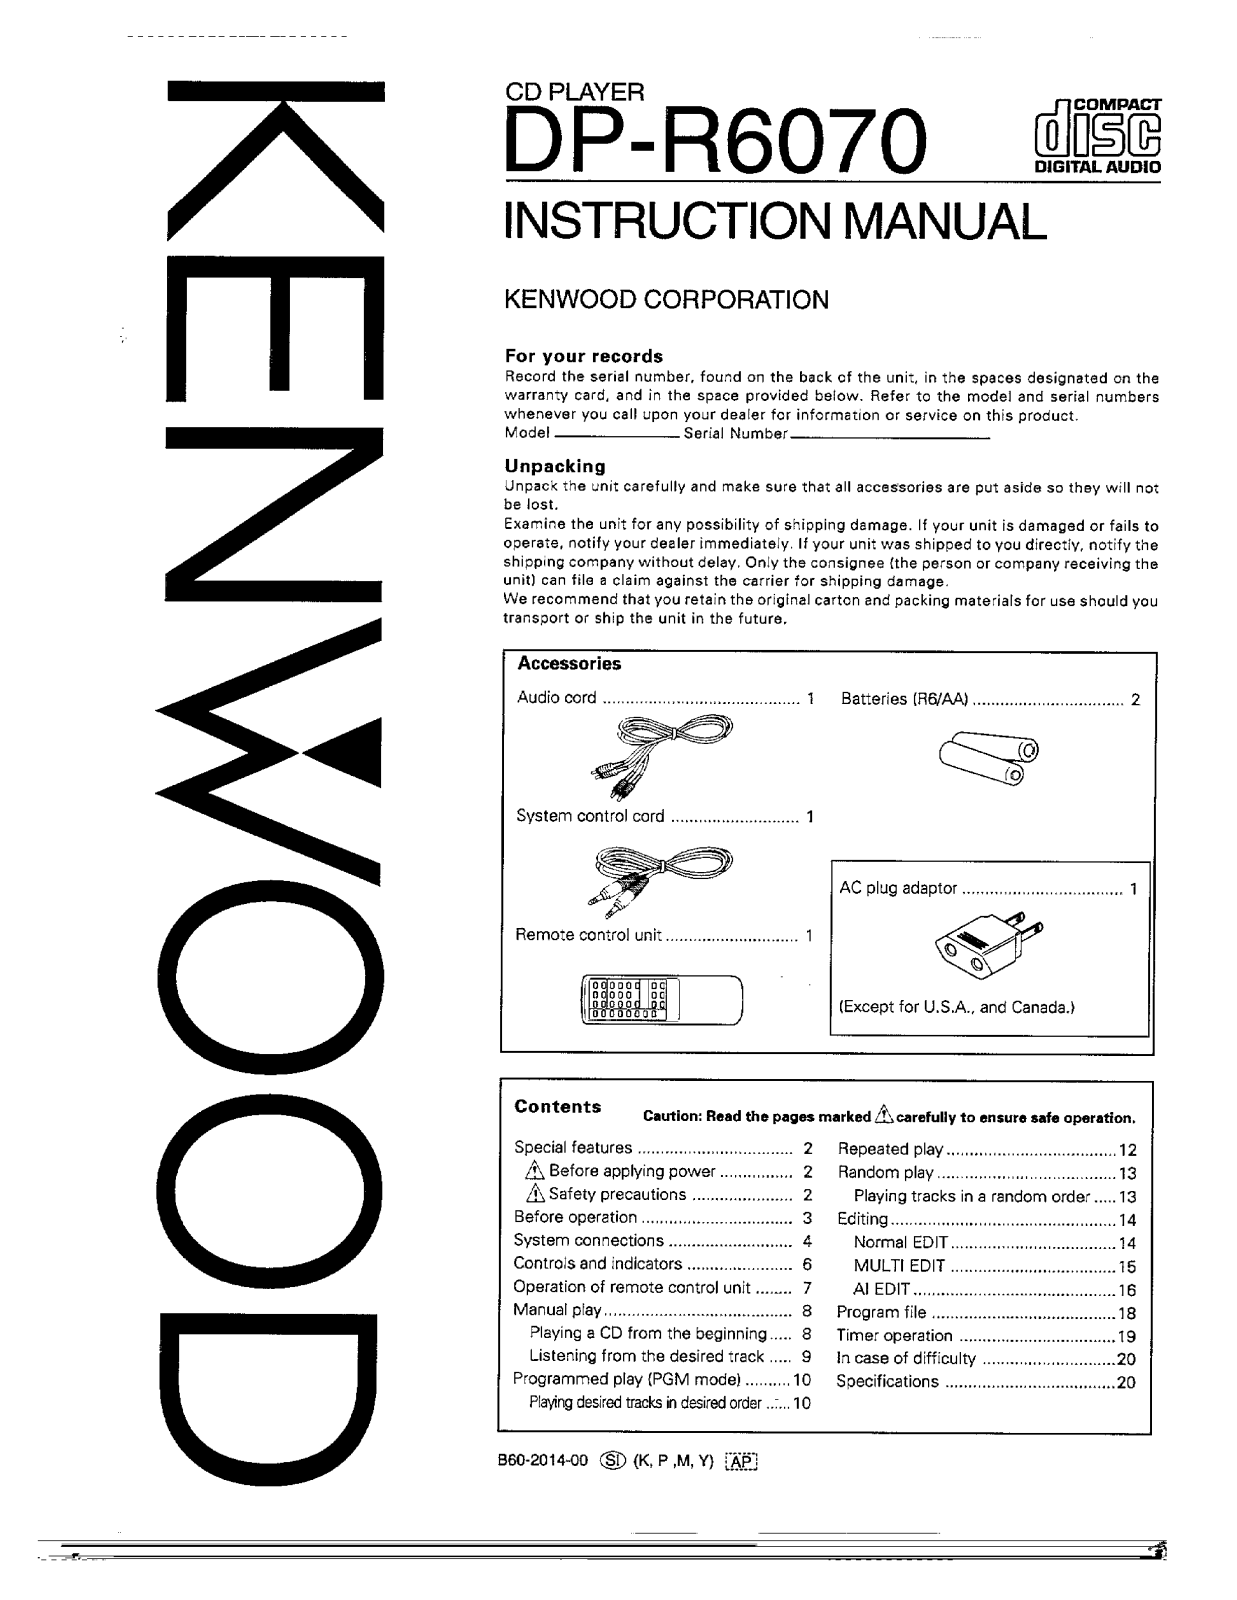 Kenwood DP-R6070 Owner's Manual